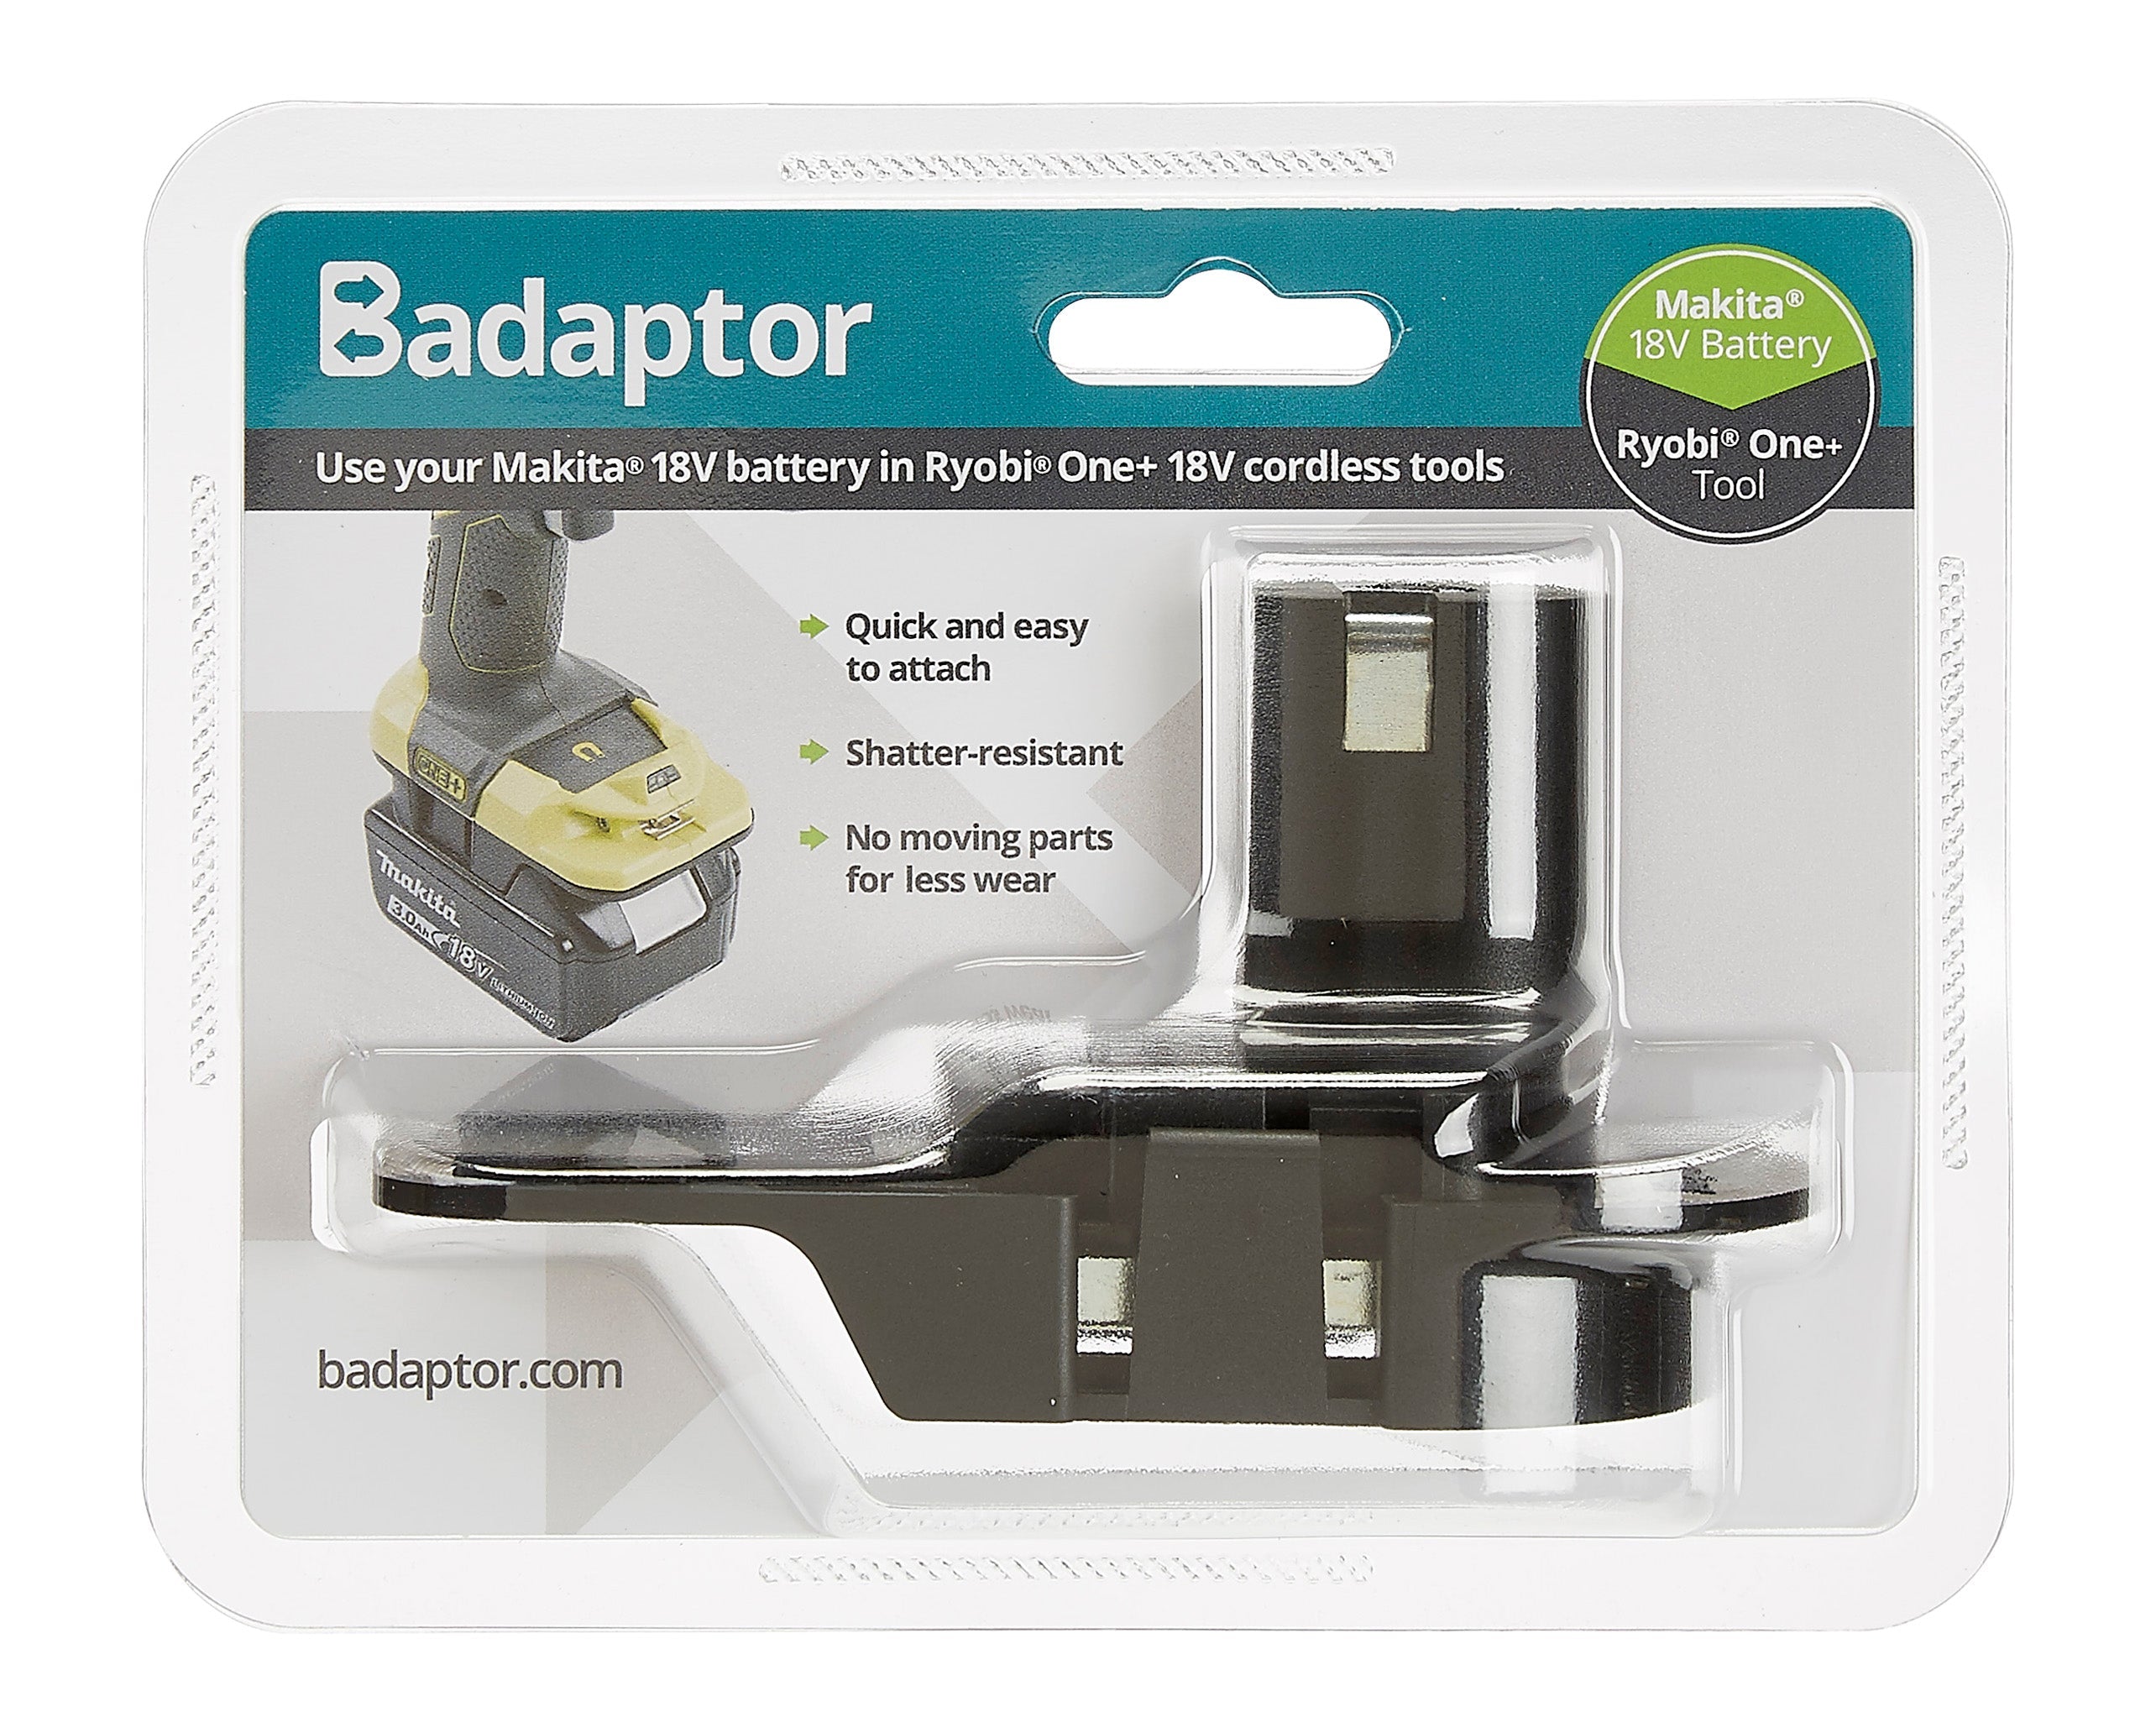 Badaptor Makita Battery Adapter to Ryobi 18v One+ Works with Ryobi 18v One+ Tool for Btec 808-12